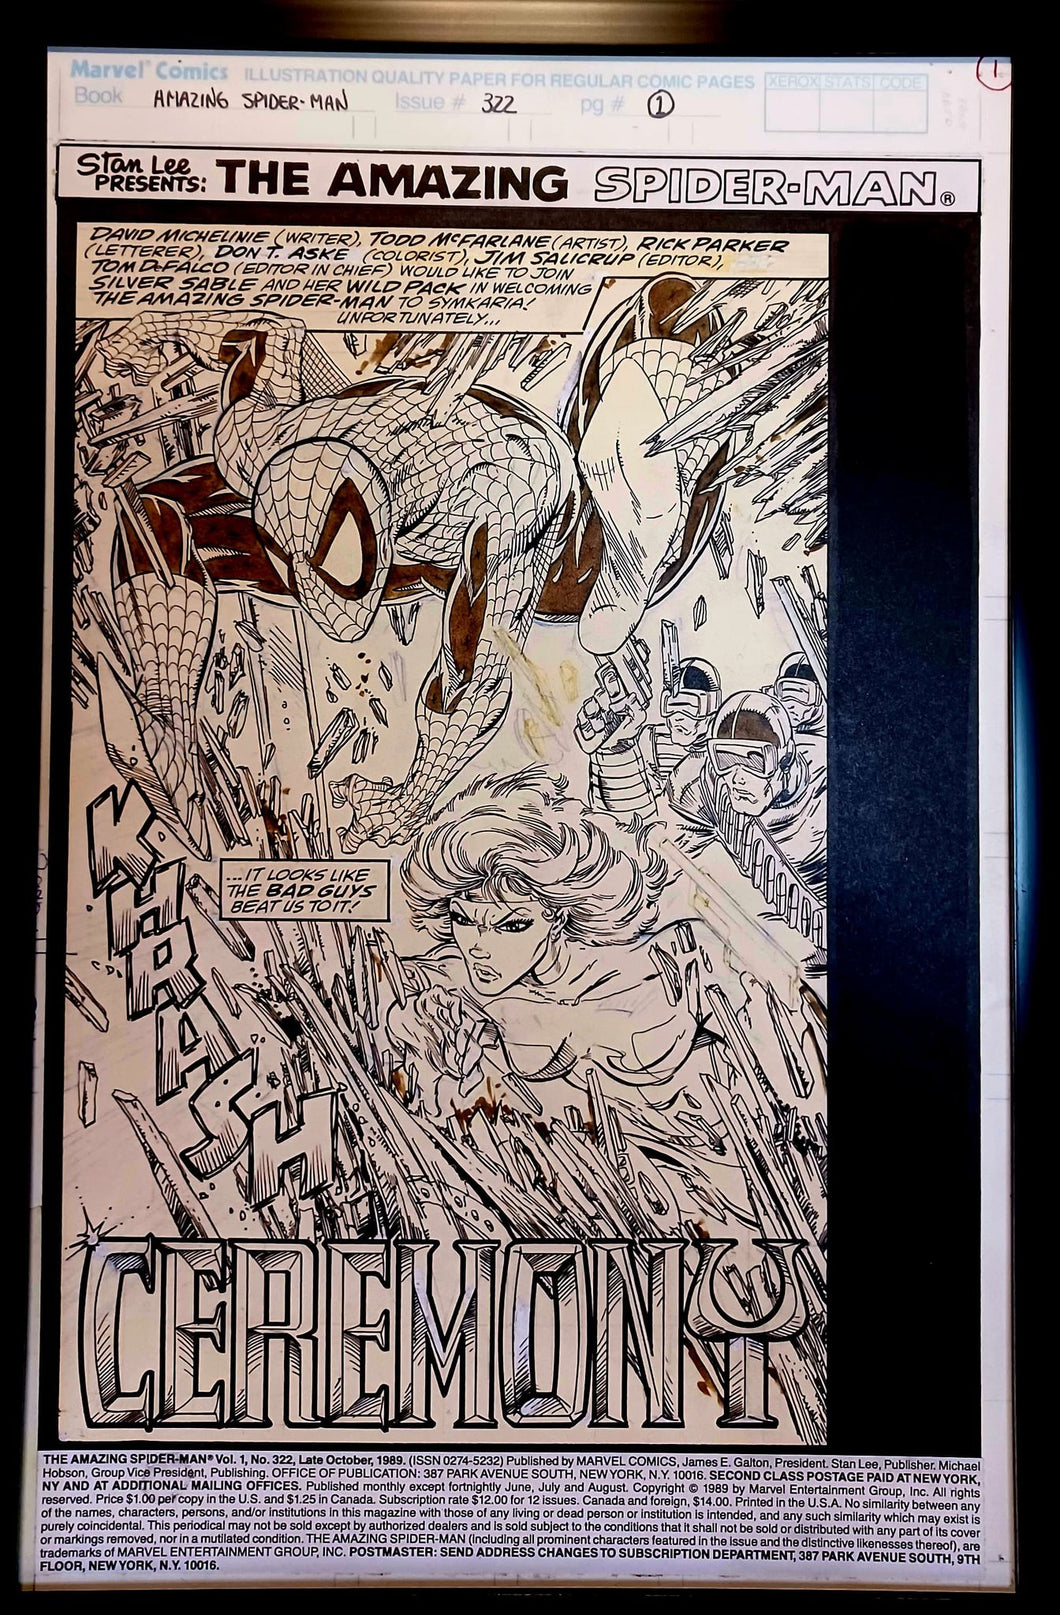 Amazing Spider-Man #322 pg. 1 by Todd McFarlane 11x17 FRAMED Original Art Print Comic Poster